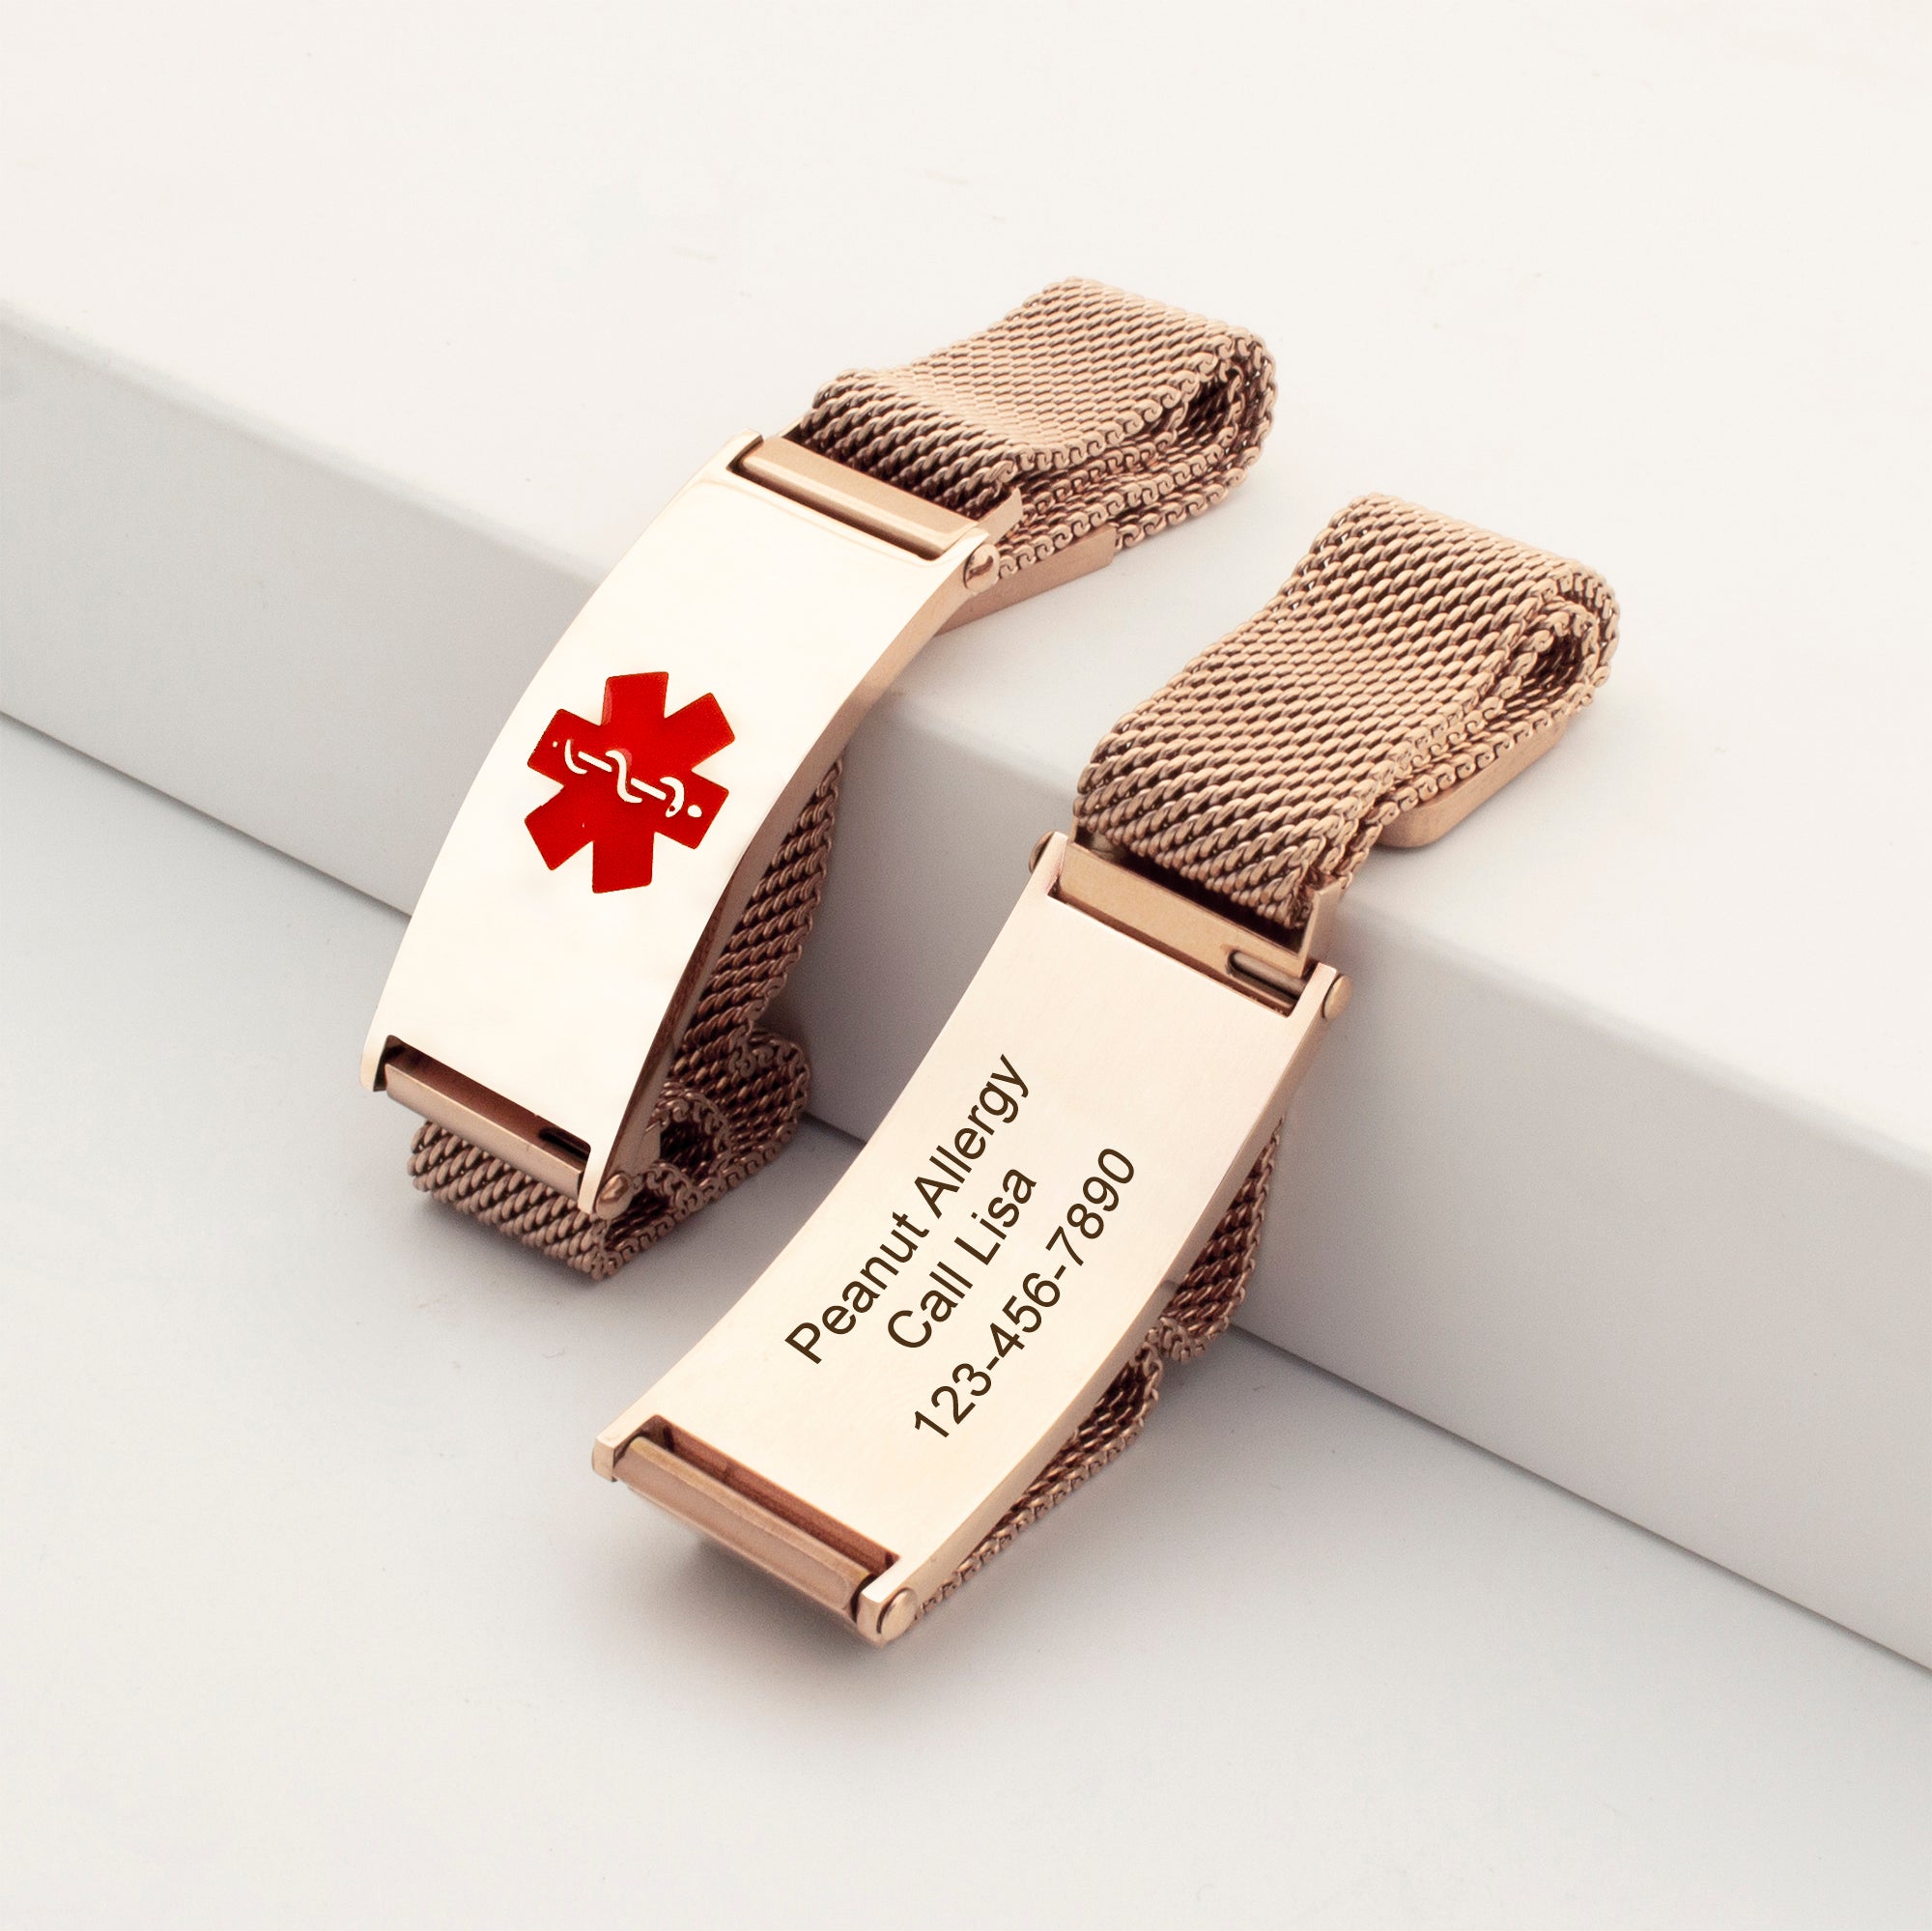 Buy JF.JEWELRY Personalized Medical ID Bracelets for Women & Men |  Customizable Stainless Steel Medical Bracelet | Allergy Diabetic Medical  Alert Bracelet, 7 5 inch at Amazon.in